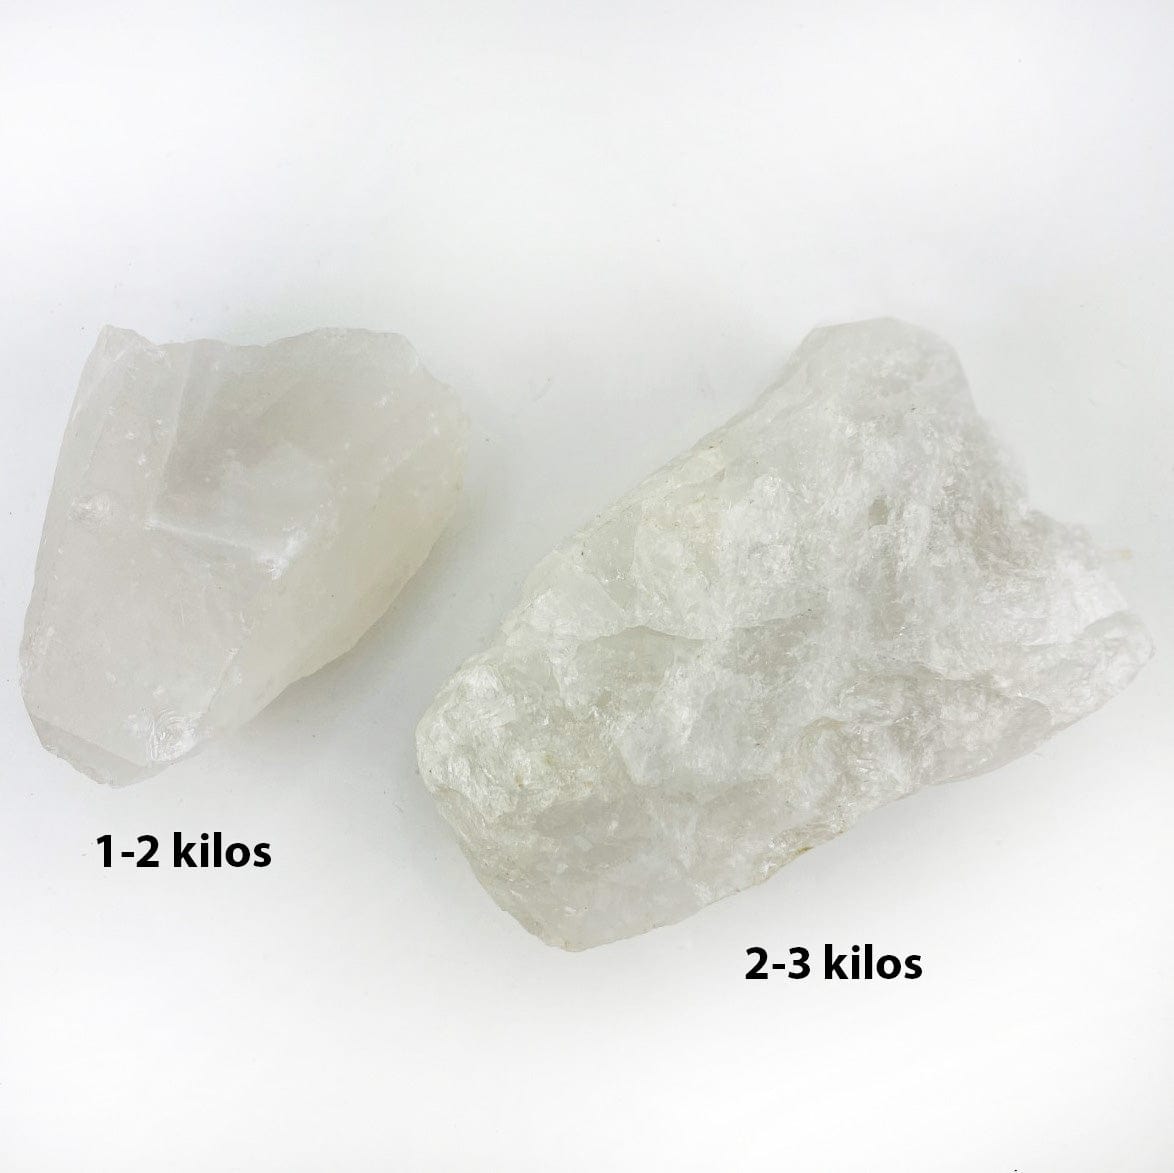 Crystal Quartz Chunk showing 1-2 kilos size and 2-3 kilos size